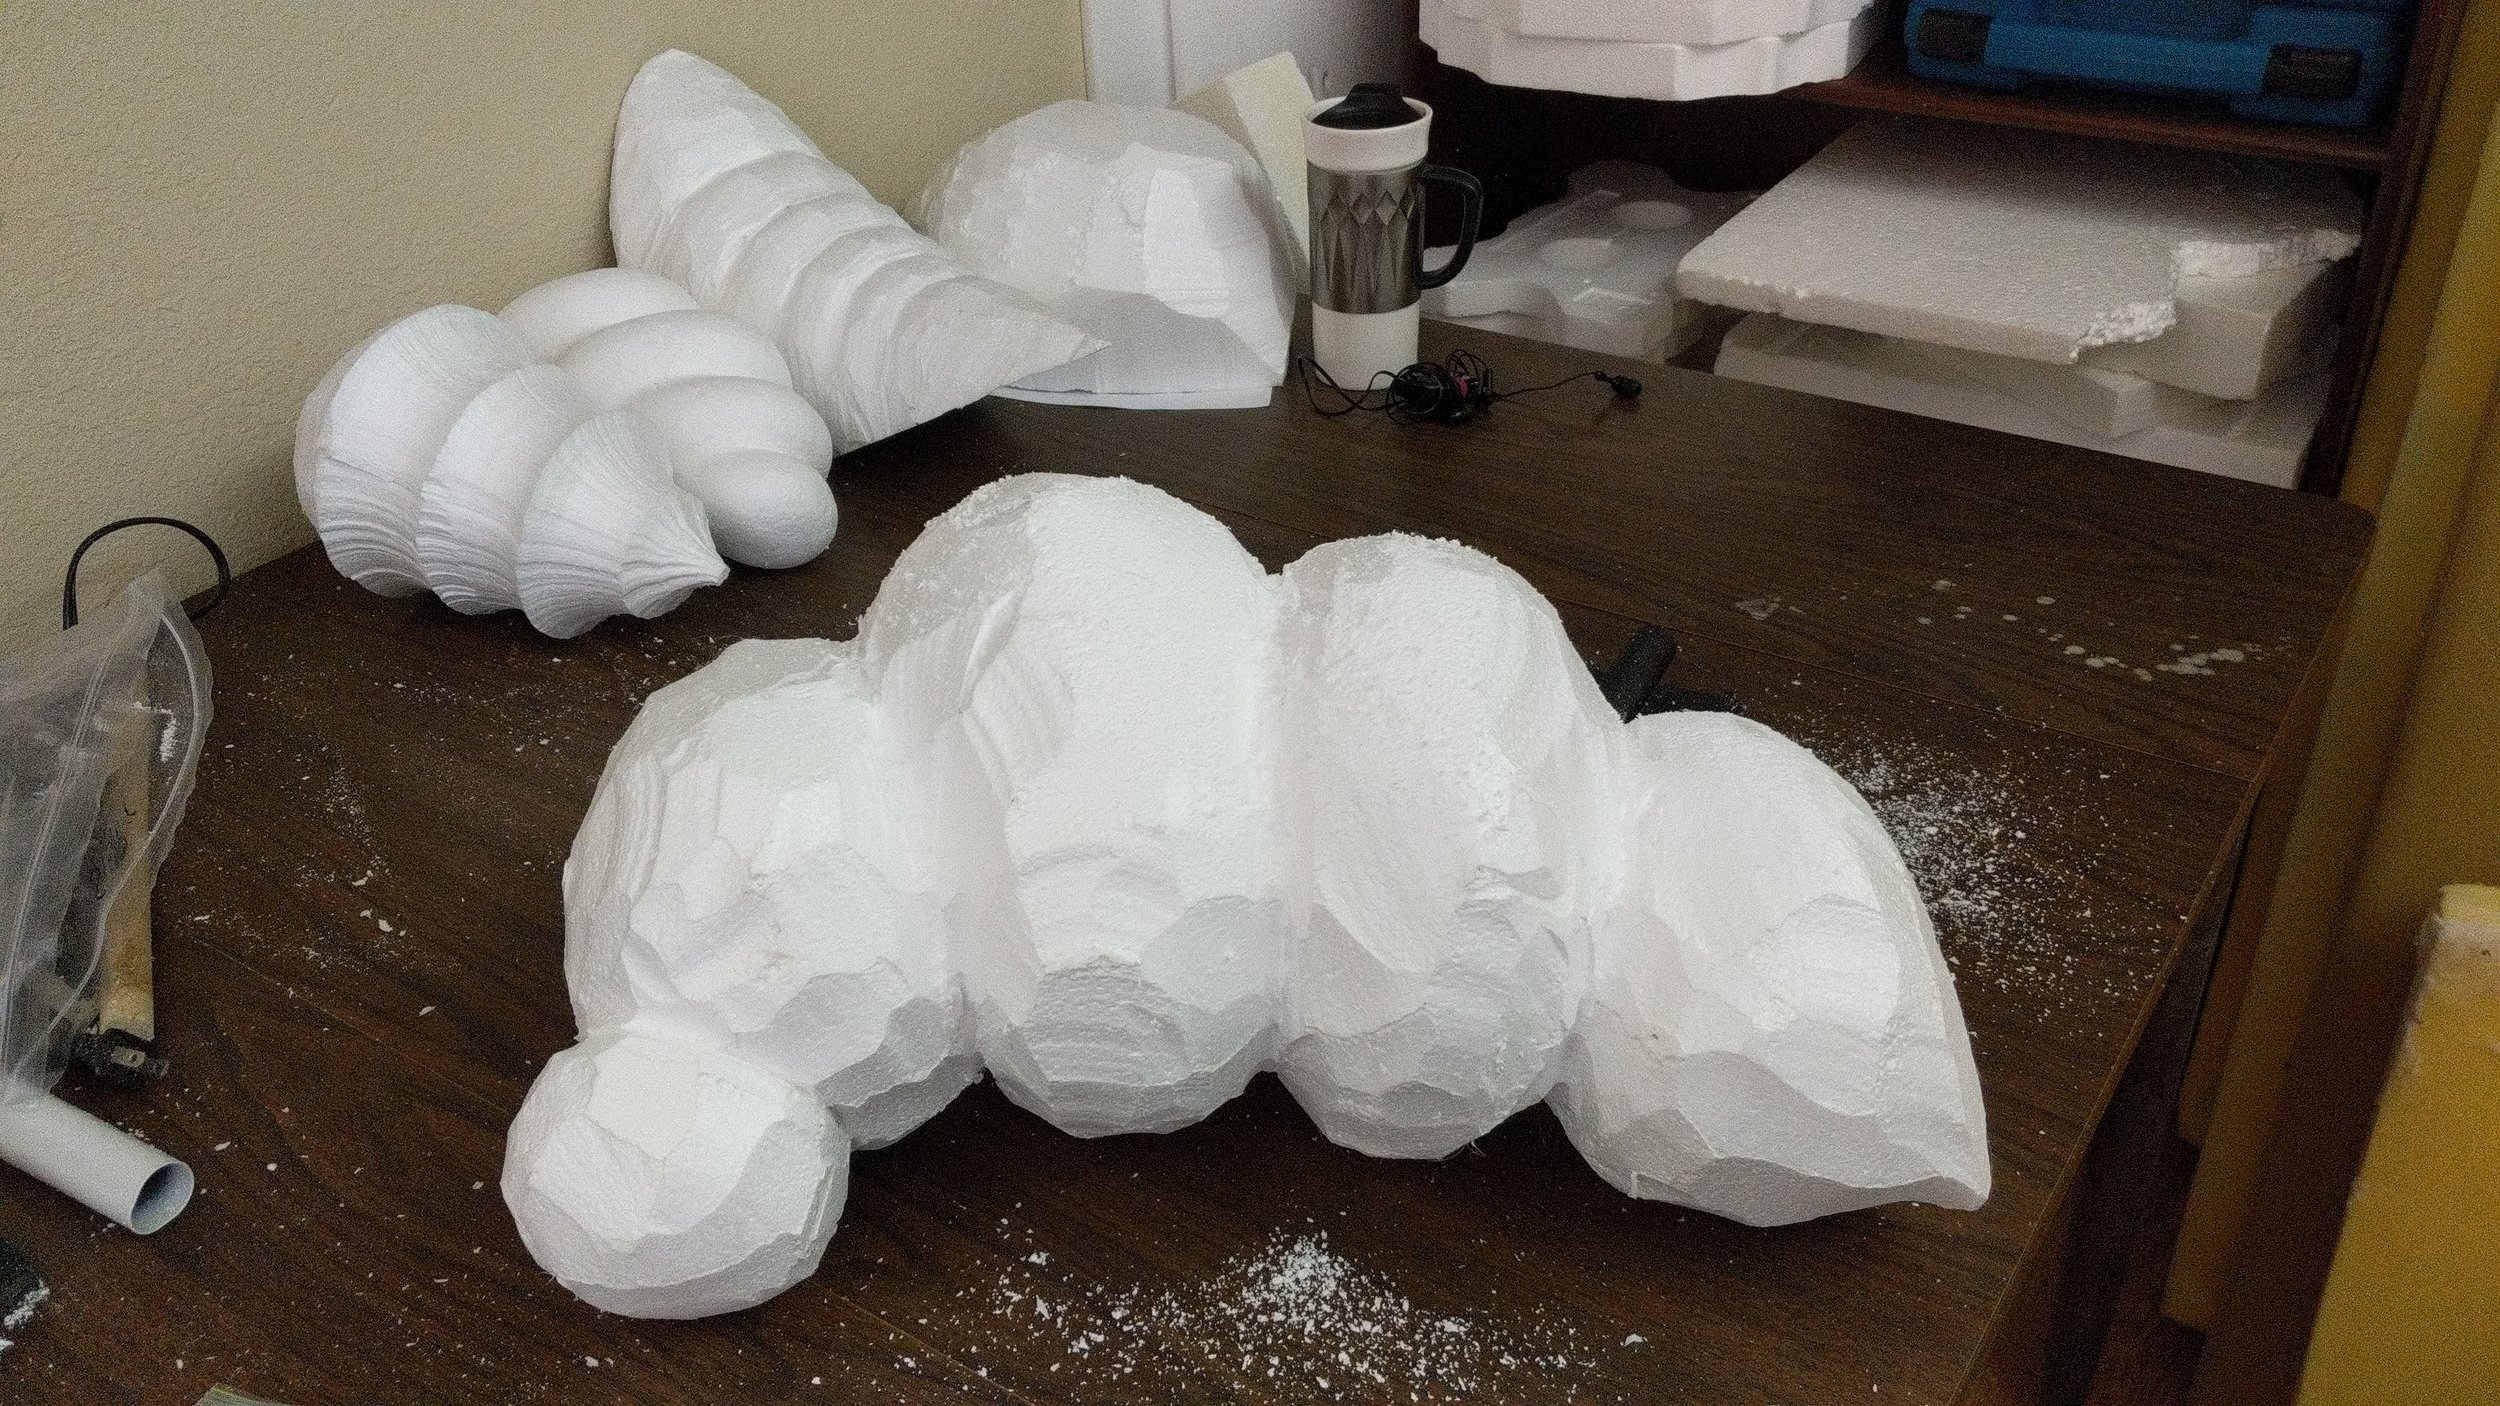 styrofoam sculpting - Google Search